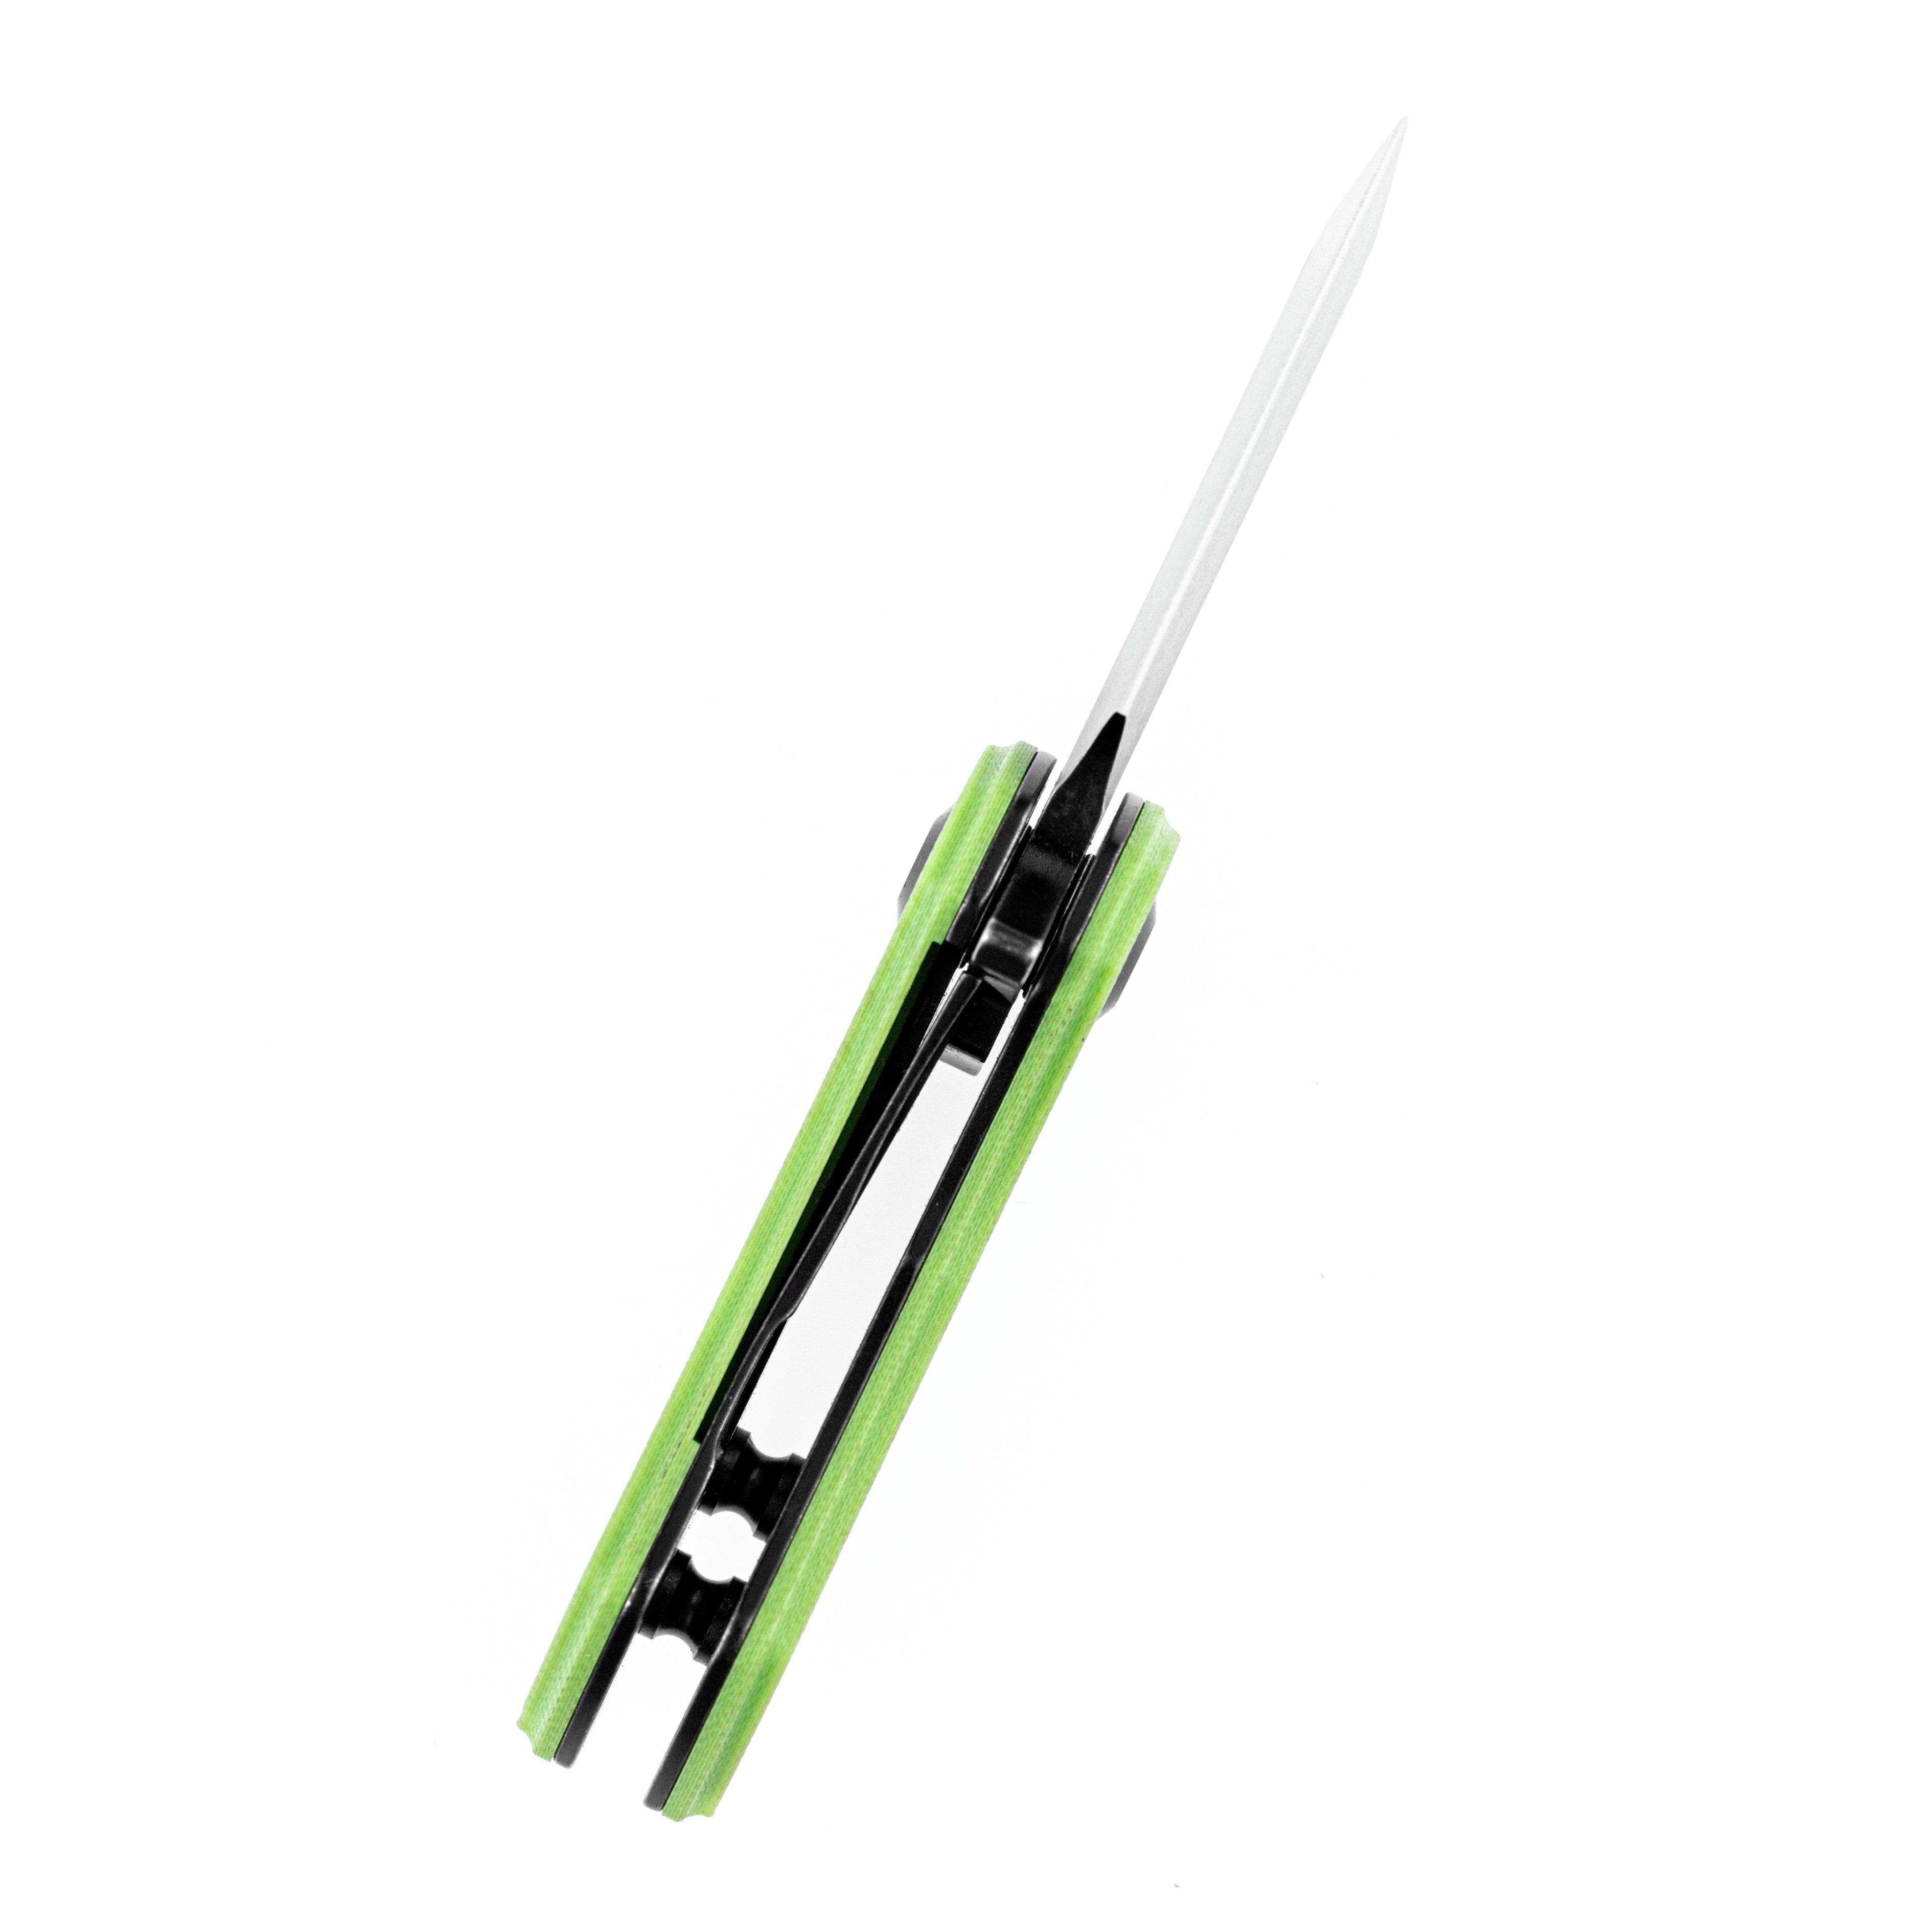 Kansept Knives T3030A8 Mini Korvid 154CM Blade Green G10 Handle Liner Lock Edc Knives